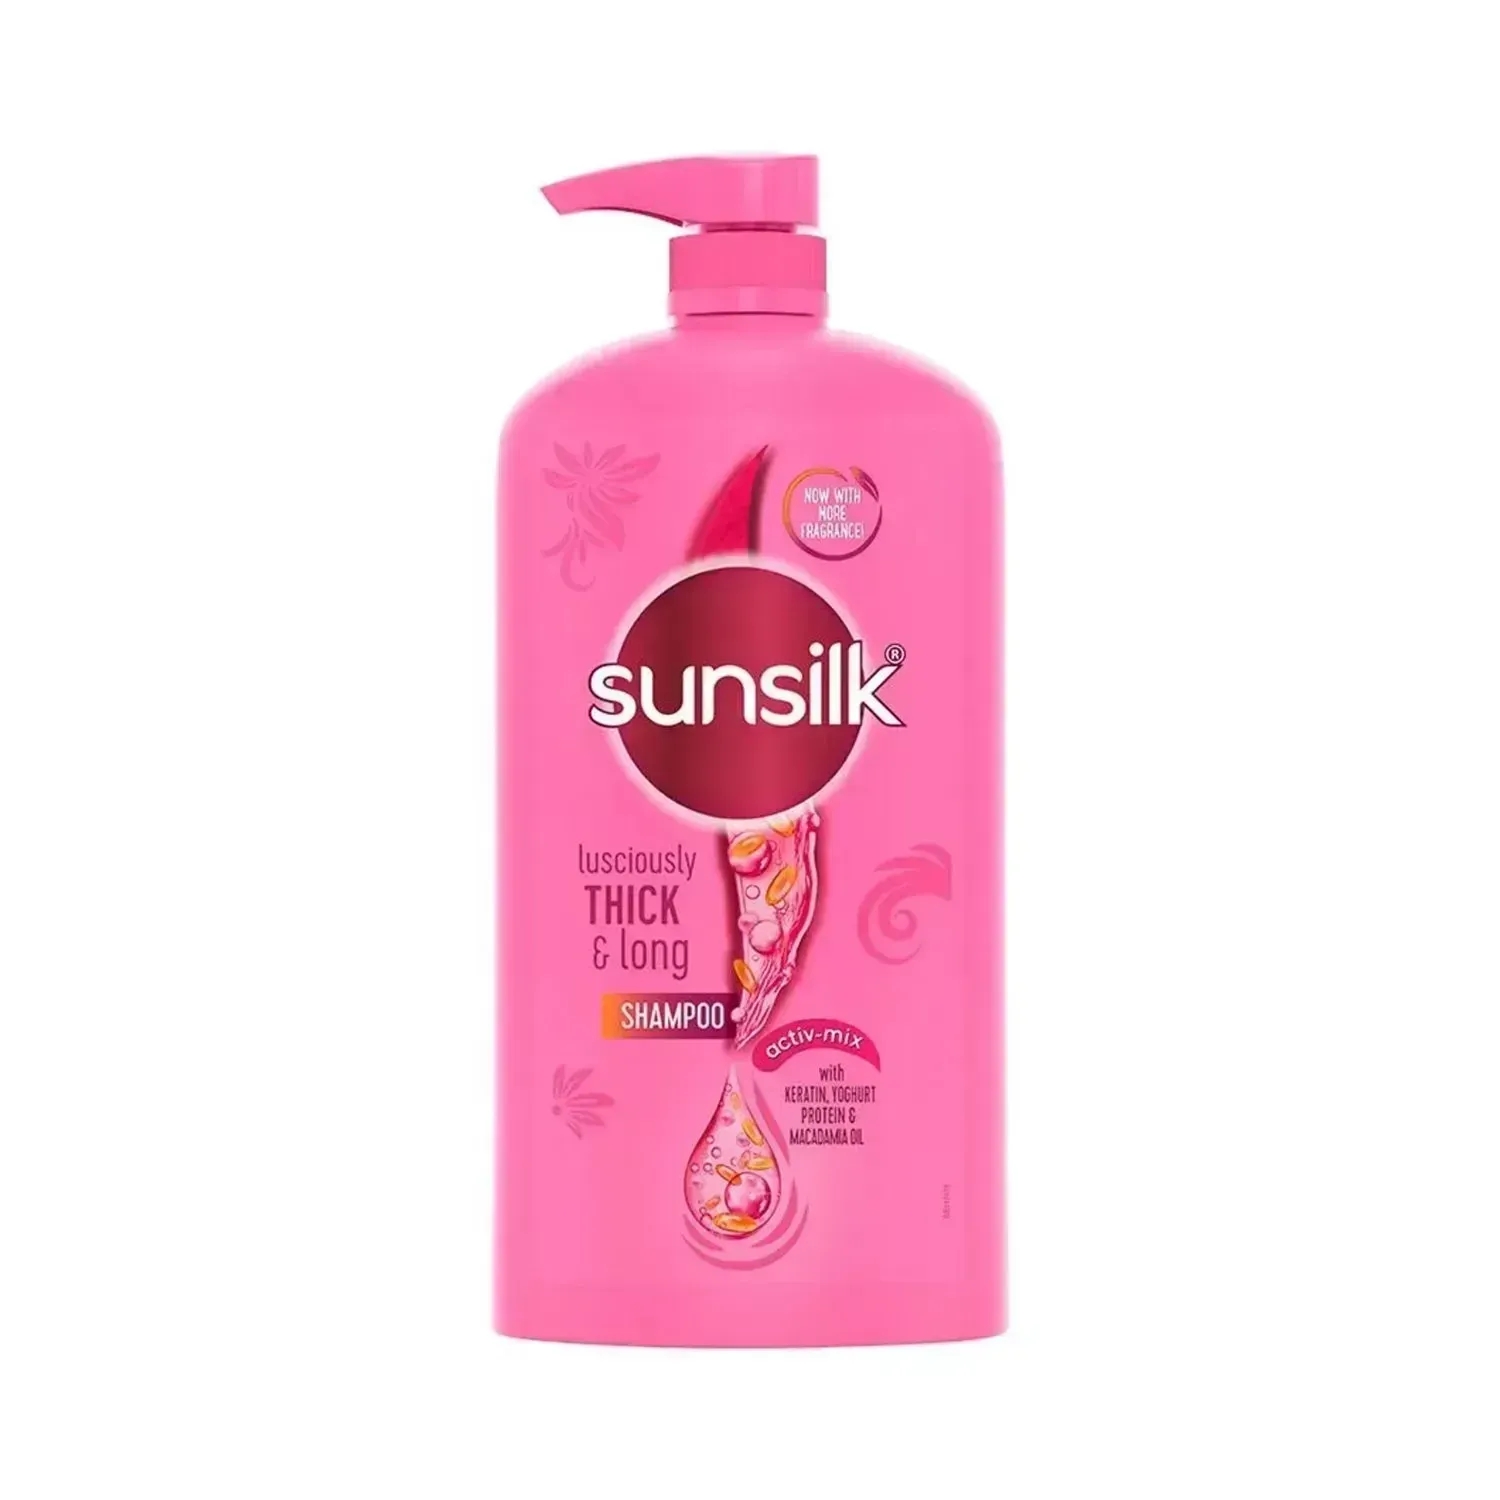 Sunsilk Stunning Black Shine Shampoo 340 ml, With Amla + Oil & Pearl  Protein, Gives Shiny, Moisturised, Fuller Hair : : Home Improvement